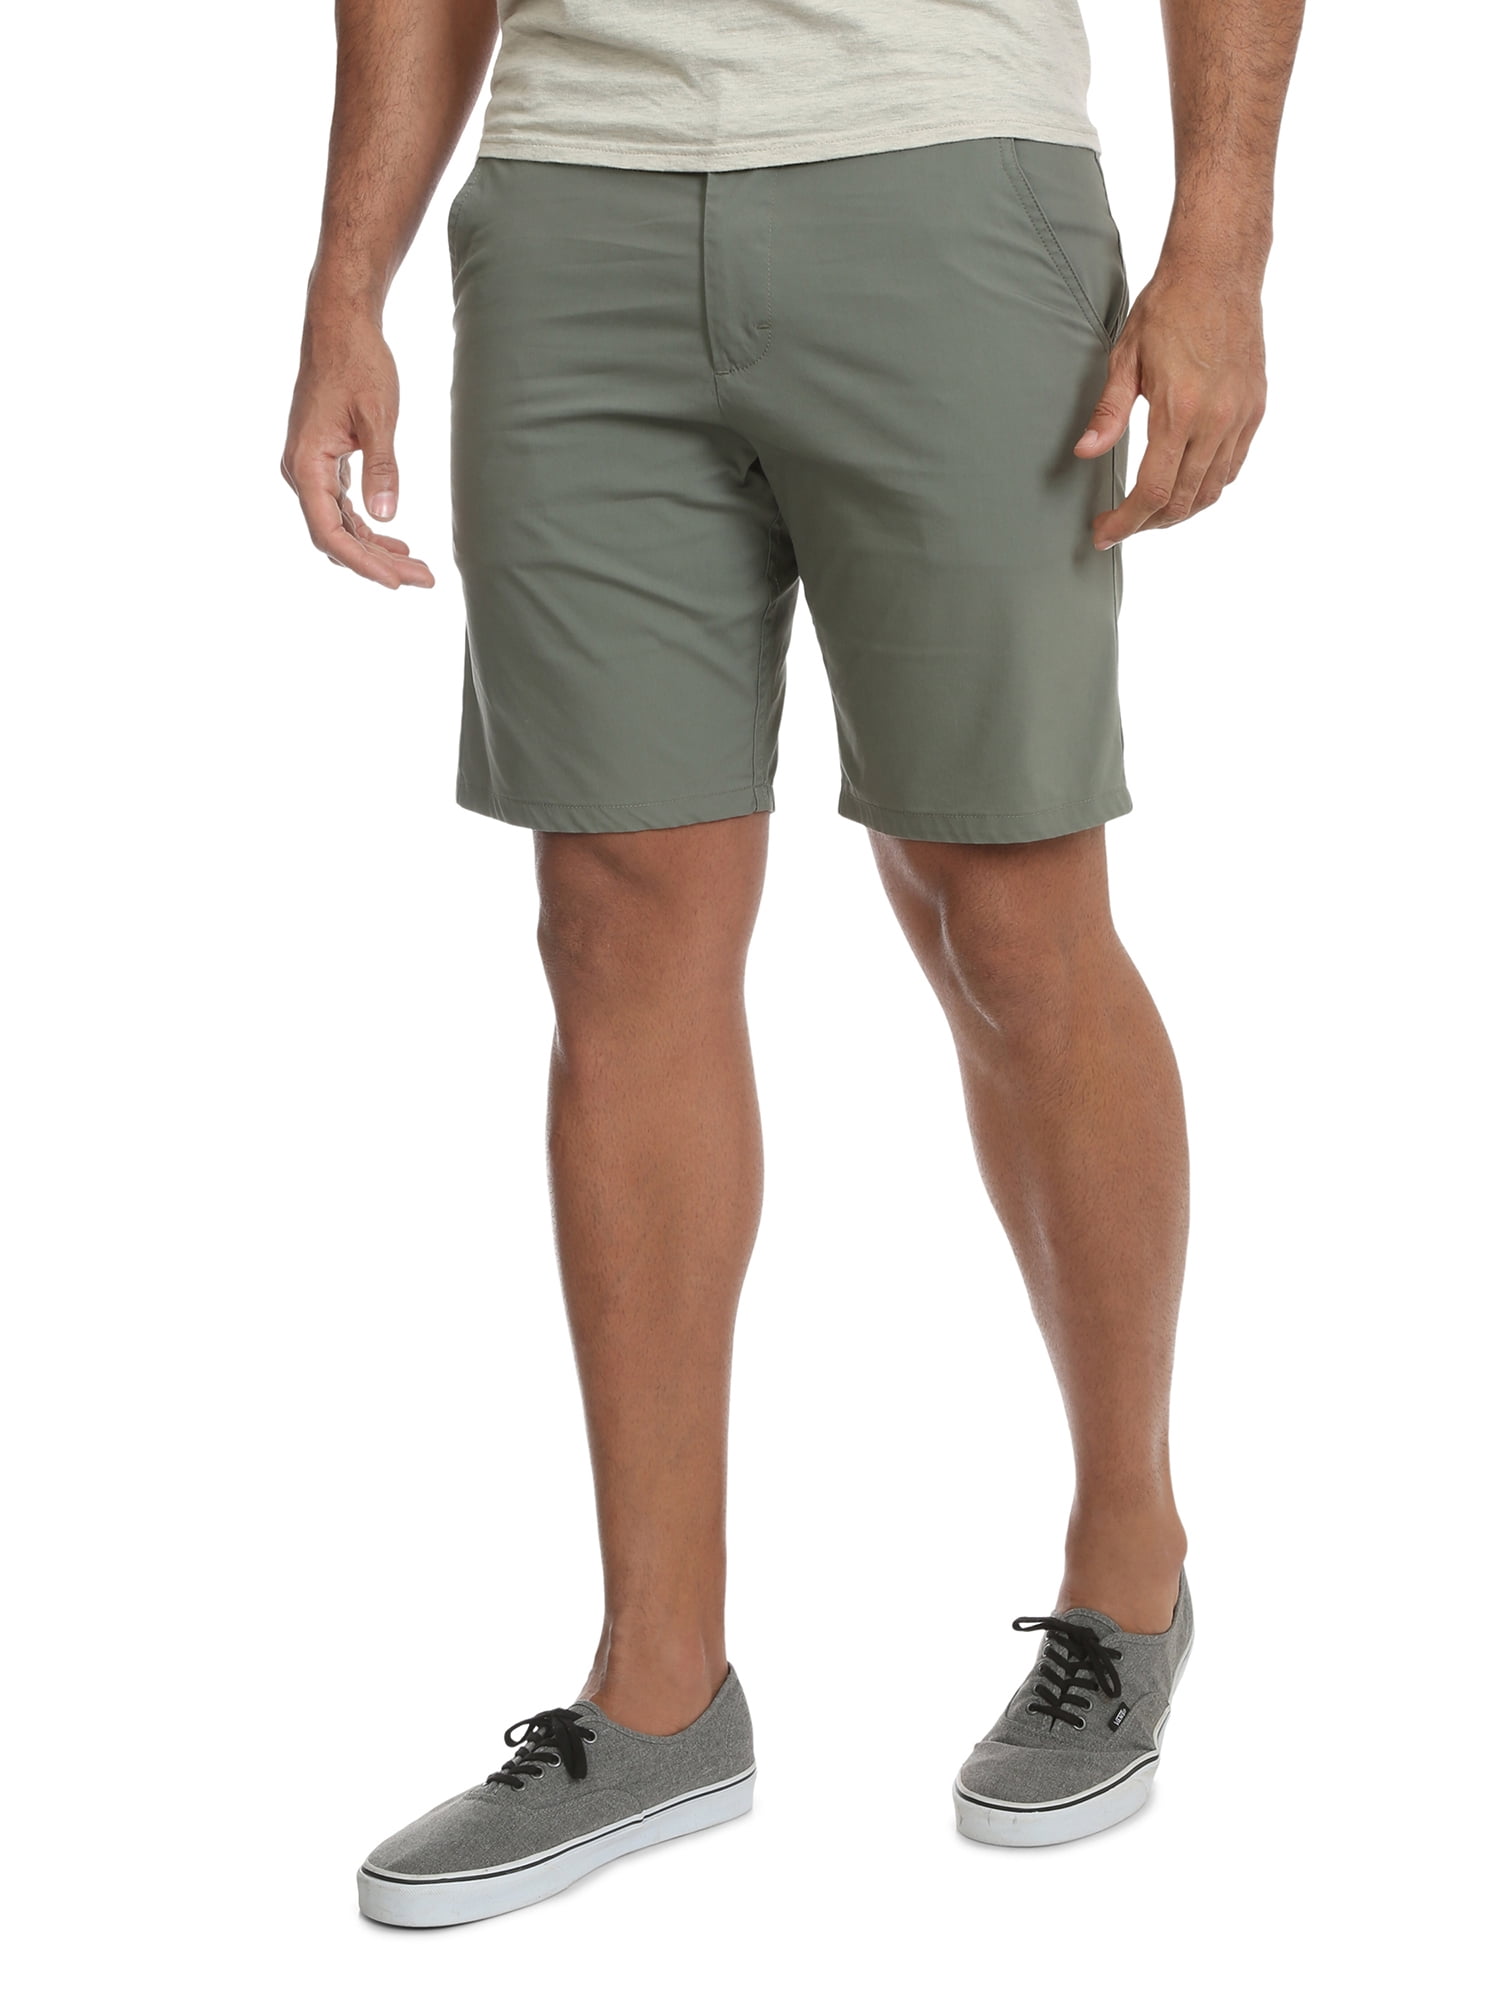 Wrangler Men's Outdoor Performance Flat Front Shorts - Walmart.com